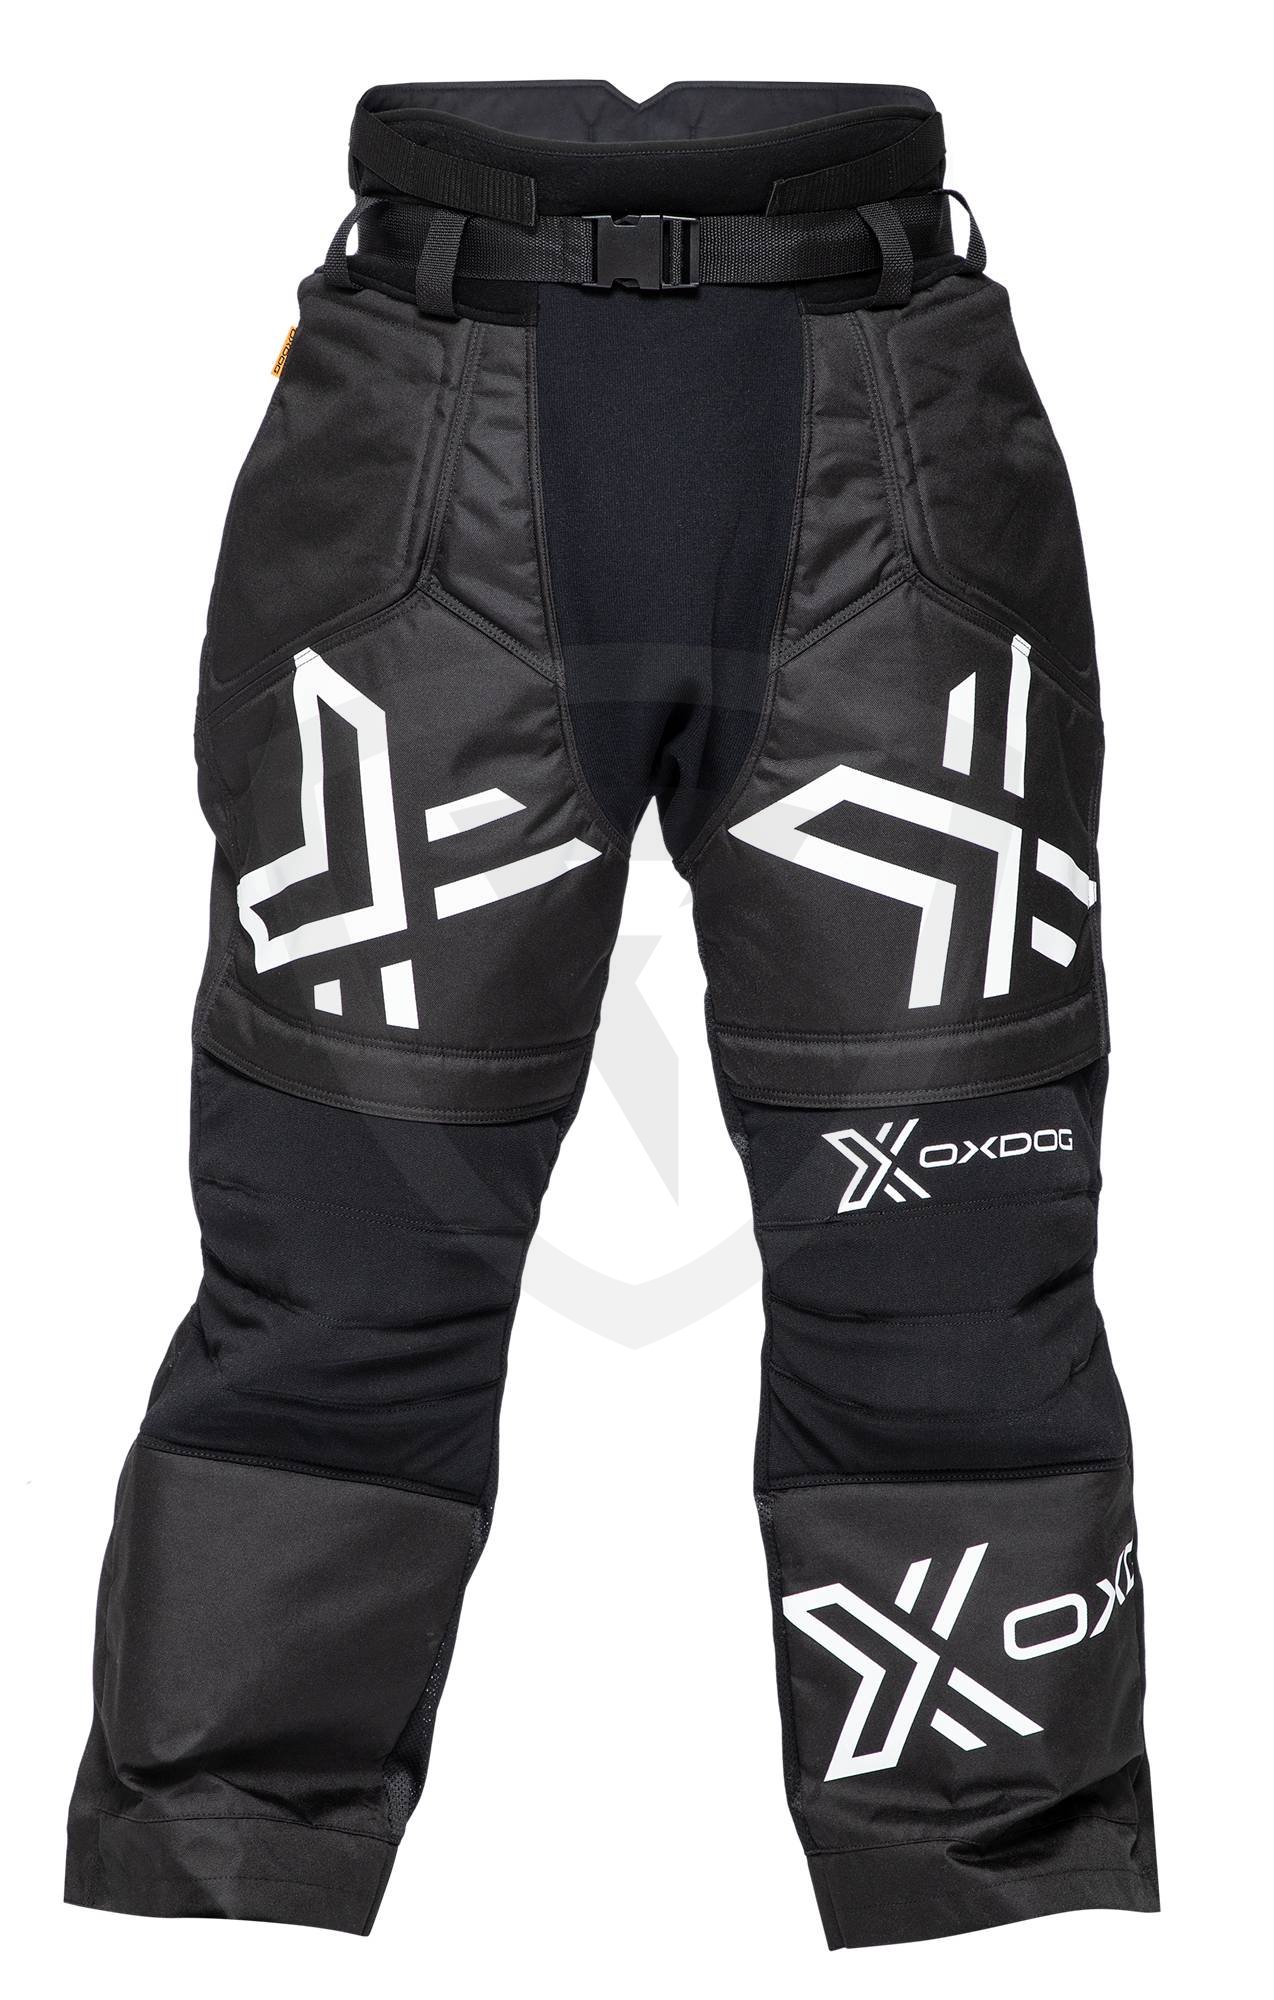 Oxdog Xguard Goalie Pants Black-White M